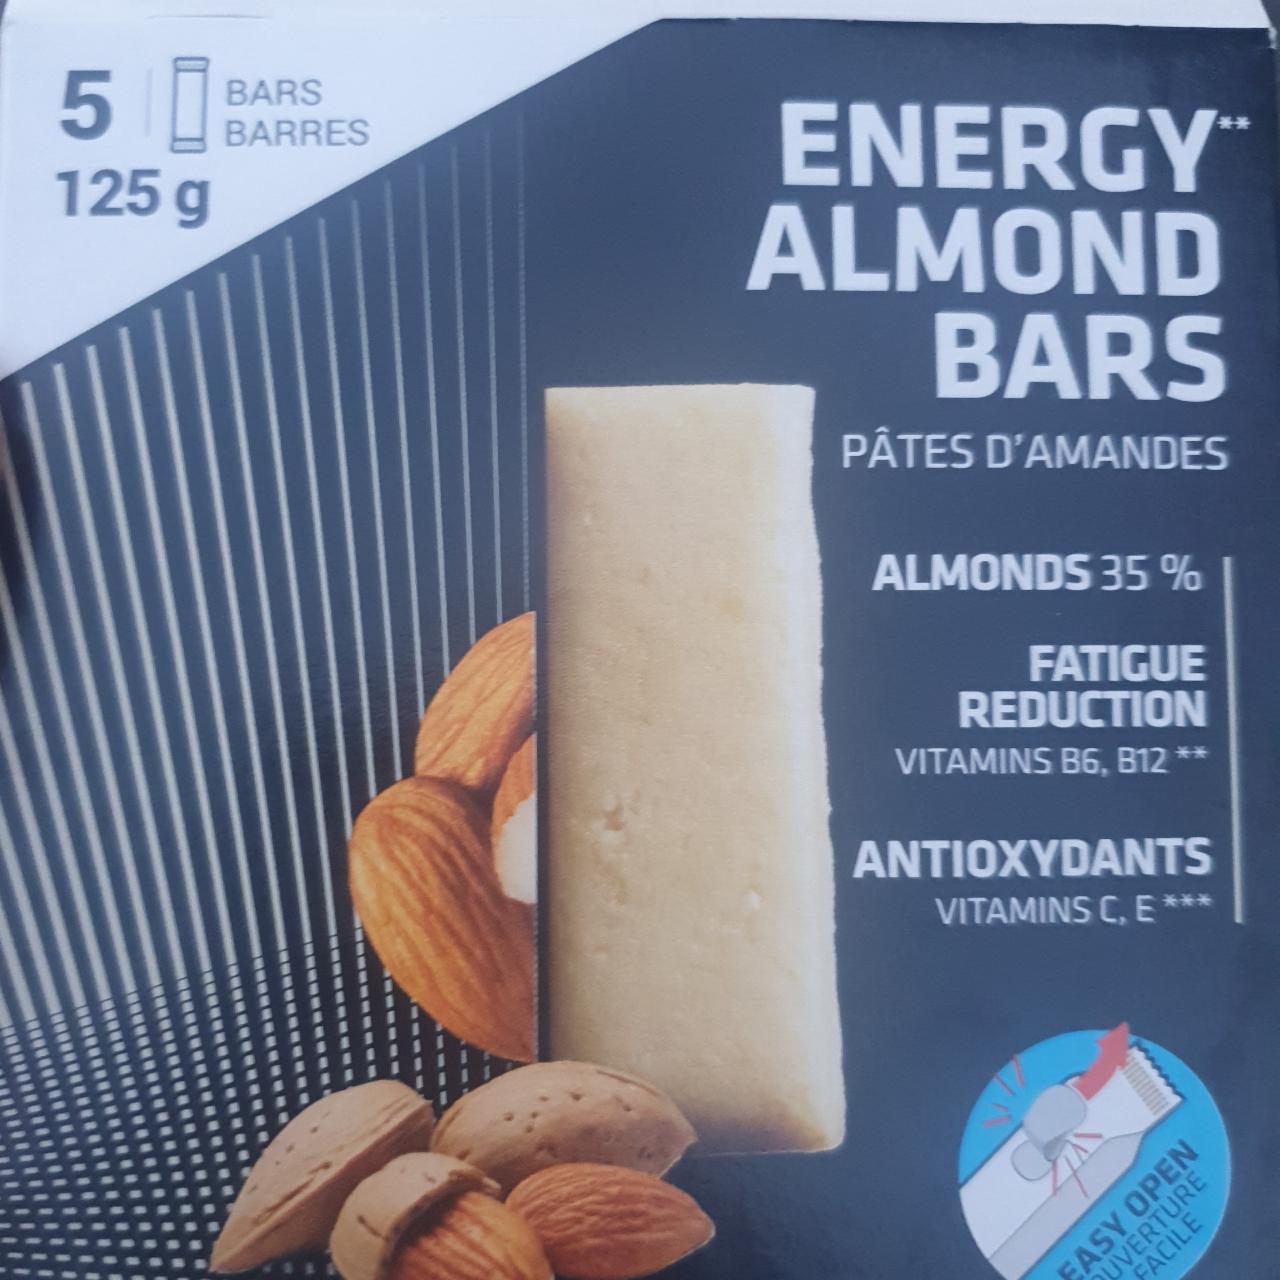 Zdjęcia - Energy almond bars Aptonia